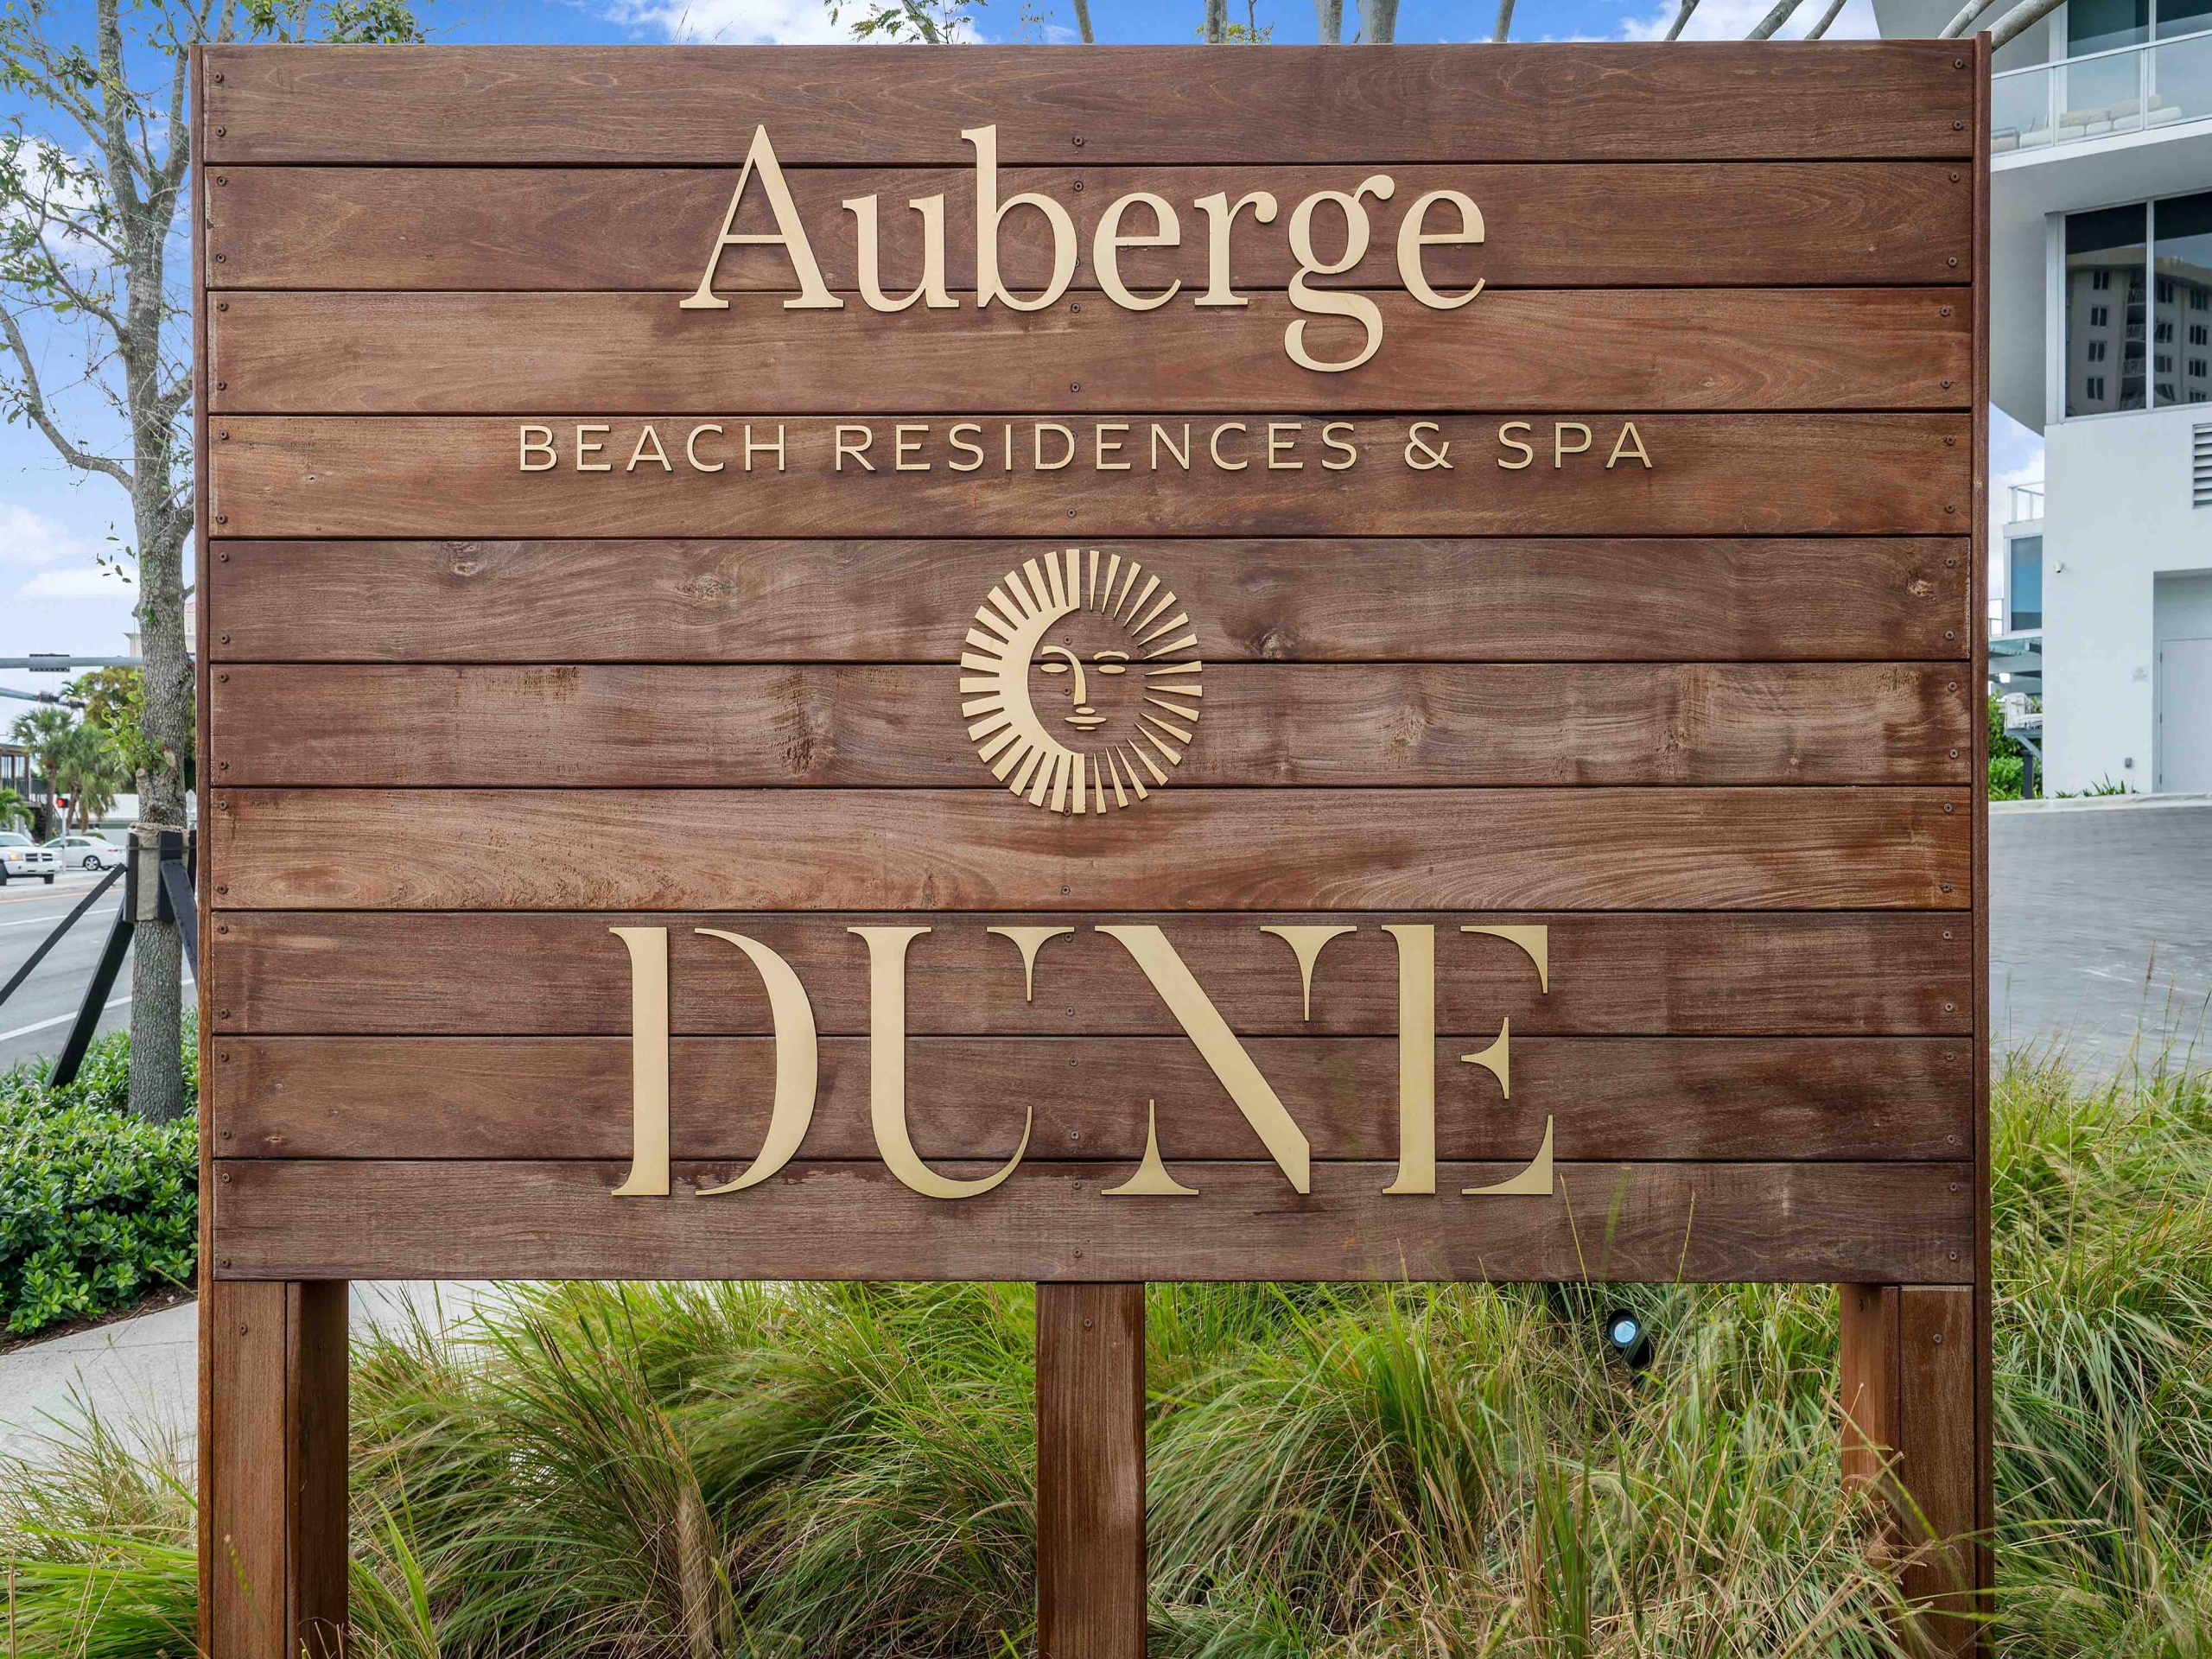 Auberge Beach Residences & Spa, Dune by L.T. Restaurant